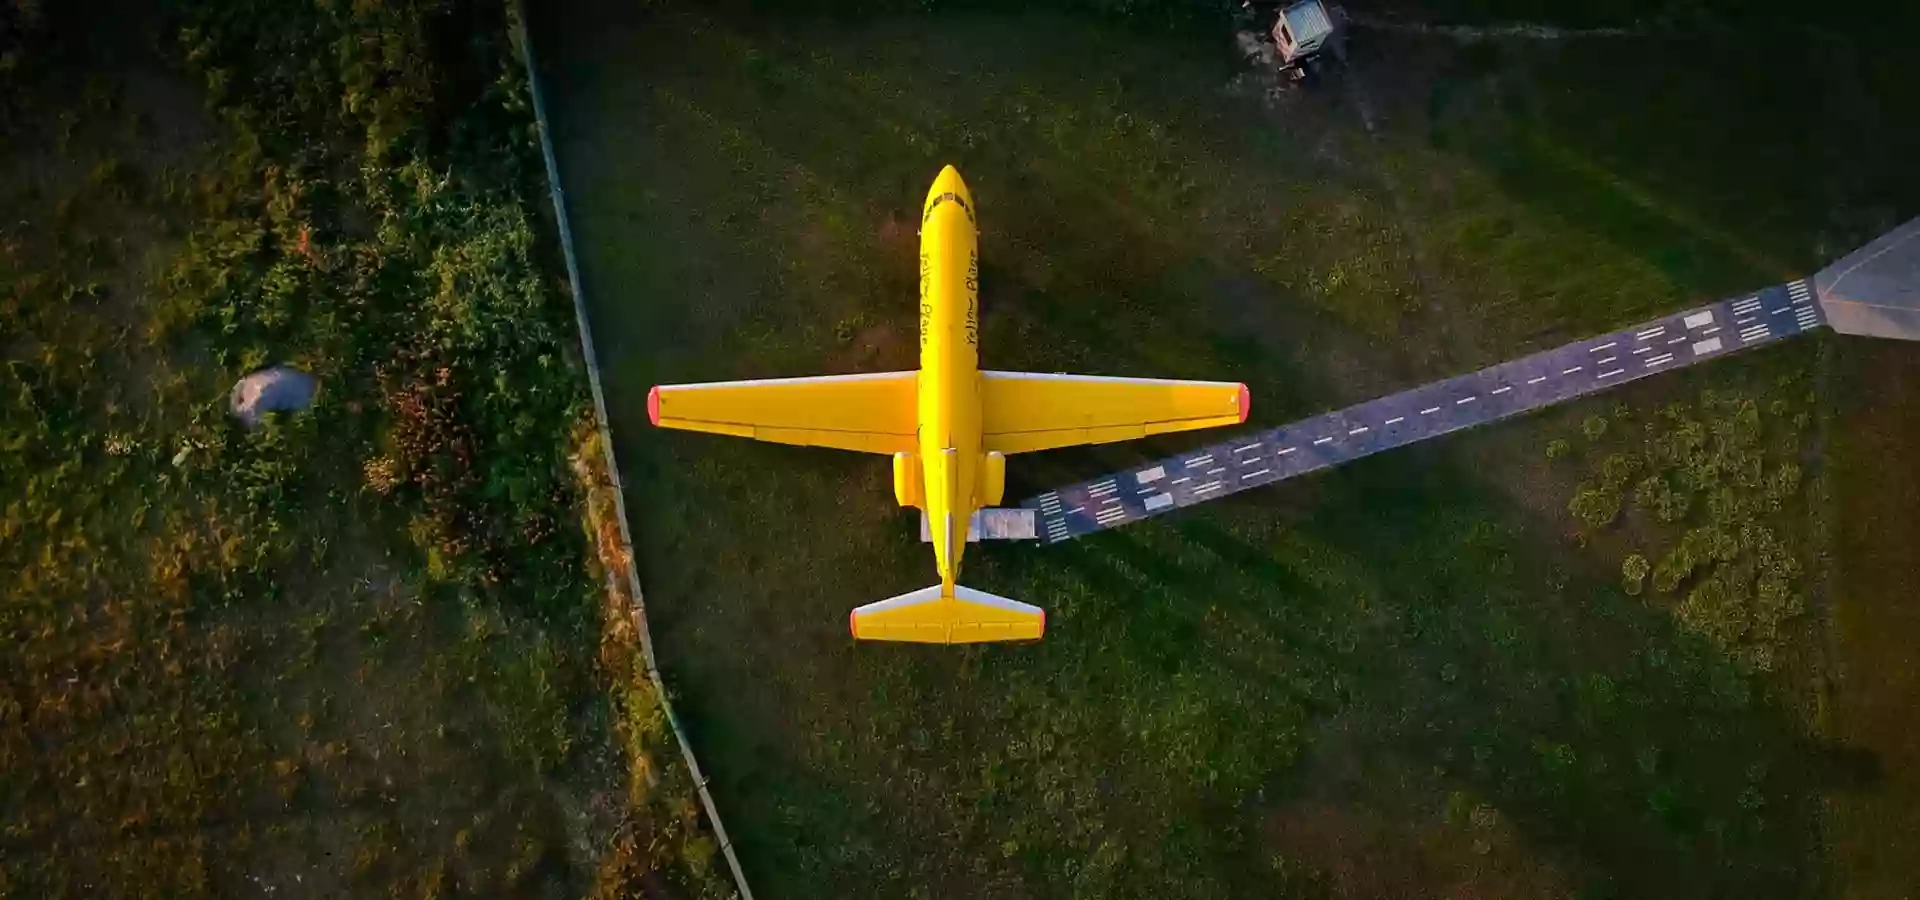 Yellow Plane